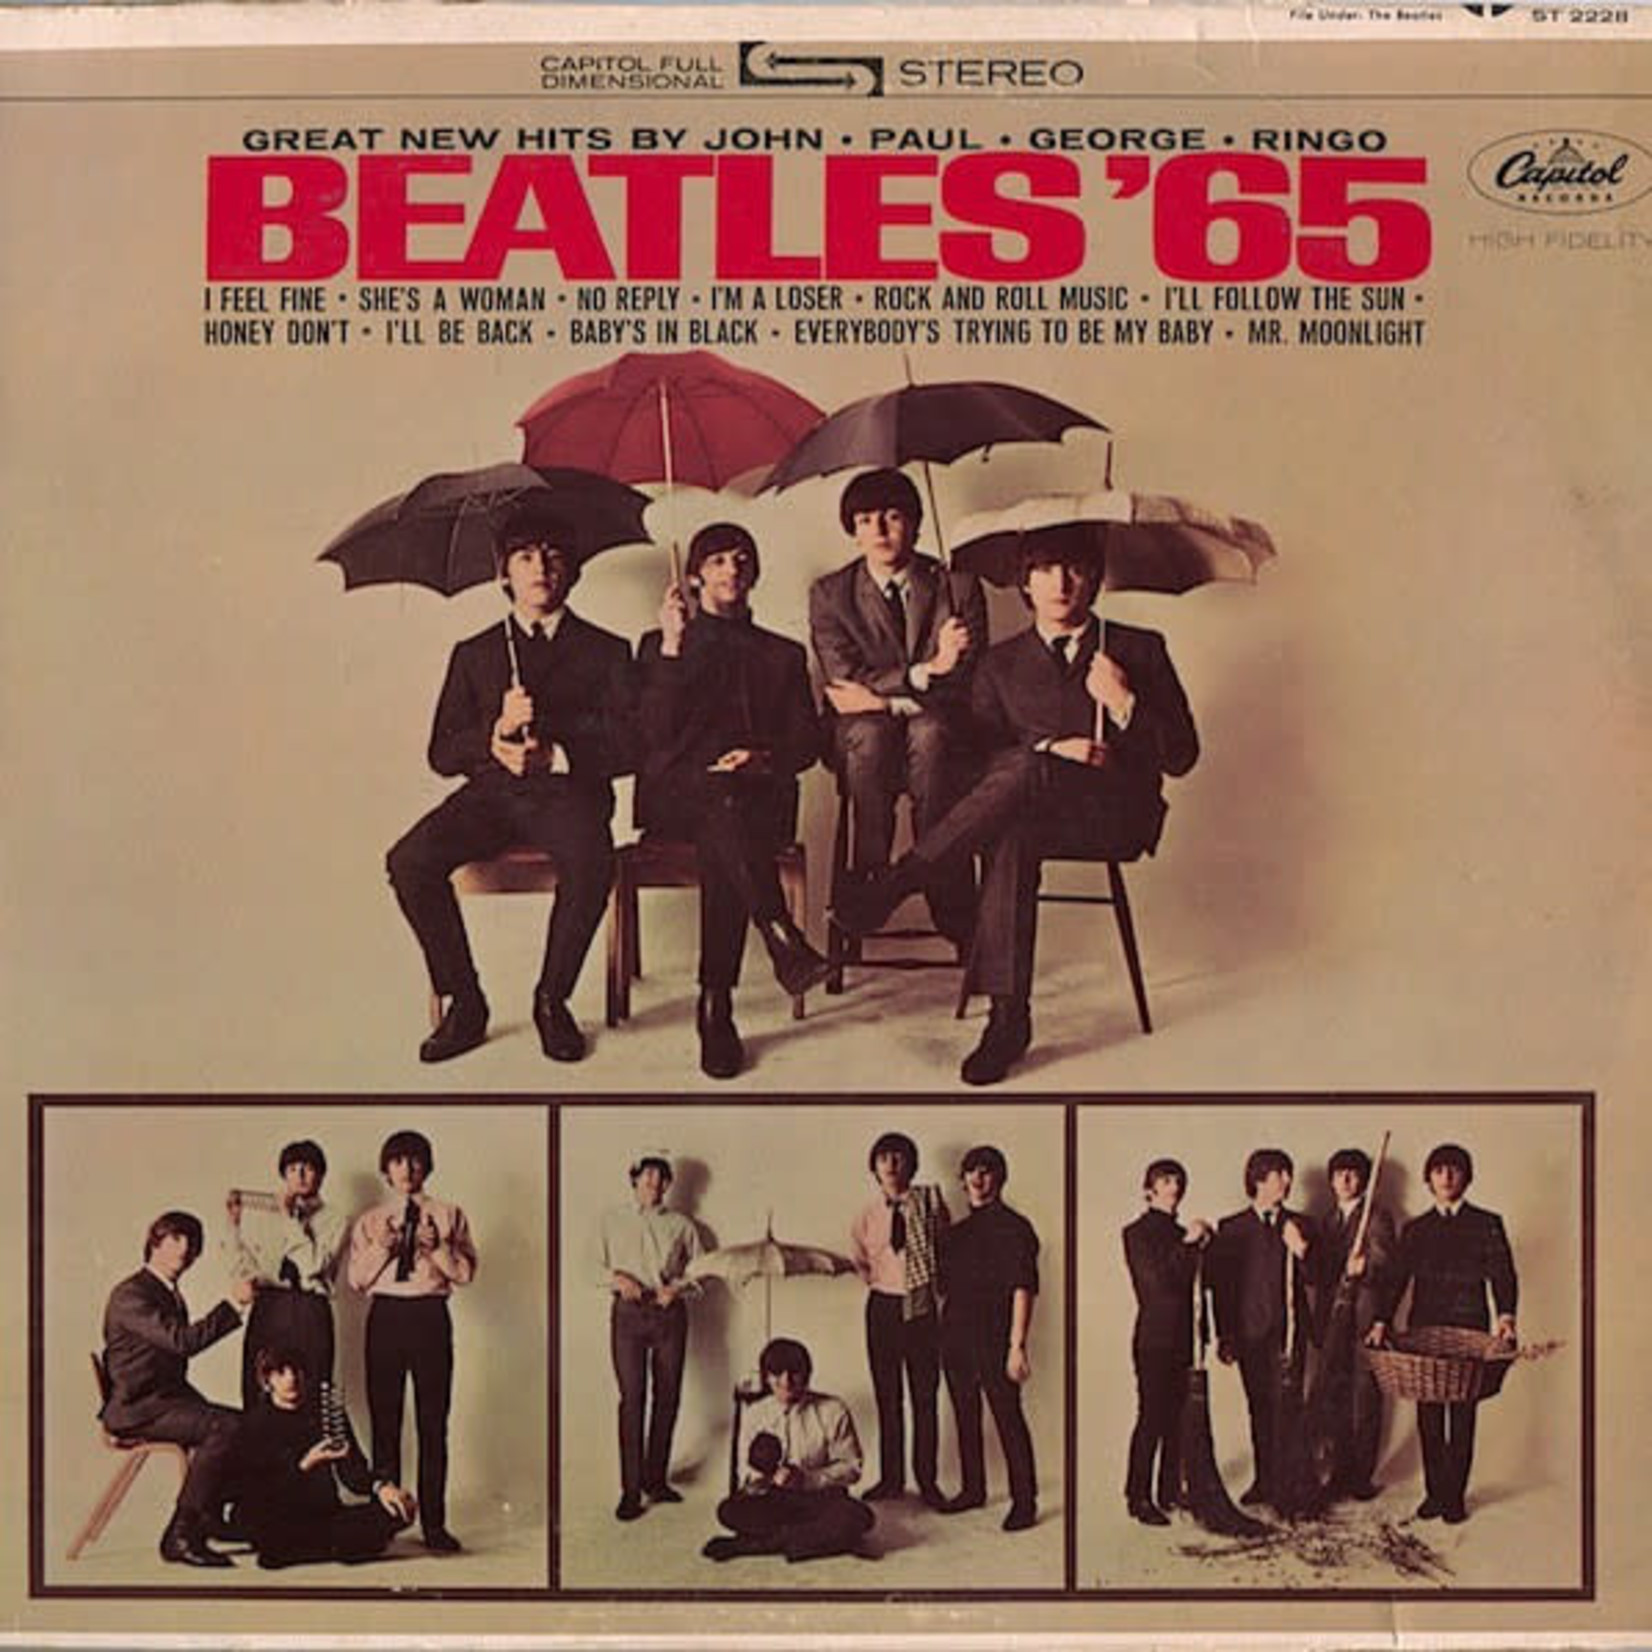 The Beatles The Beatles - Beatles '65 (VG+, 1980, LP, Reissue, Capitol Records – ST 2228)